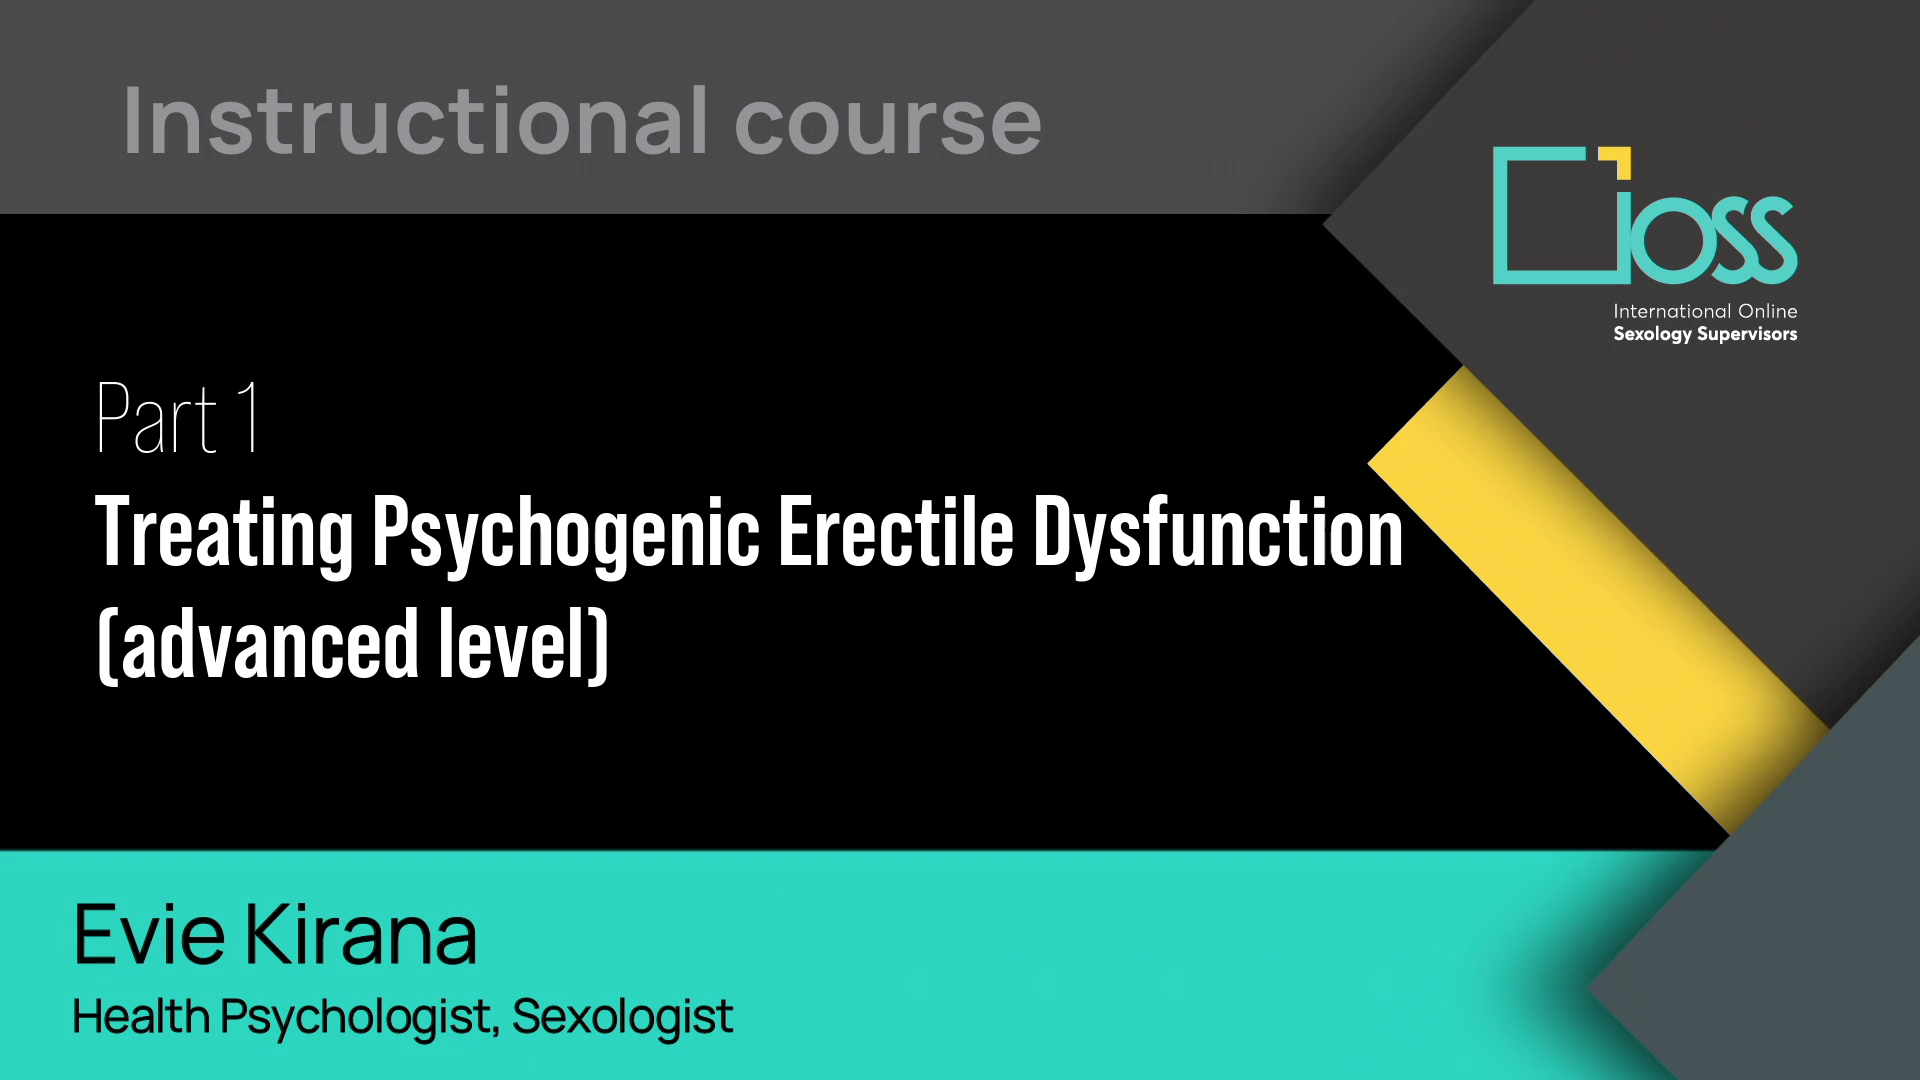 Part 1 Treating Psychogenic Erectile Dysfunction advanced (Part 1 & 2)